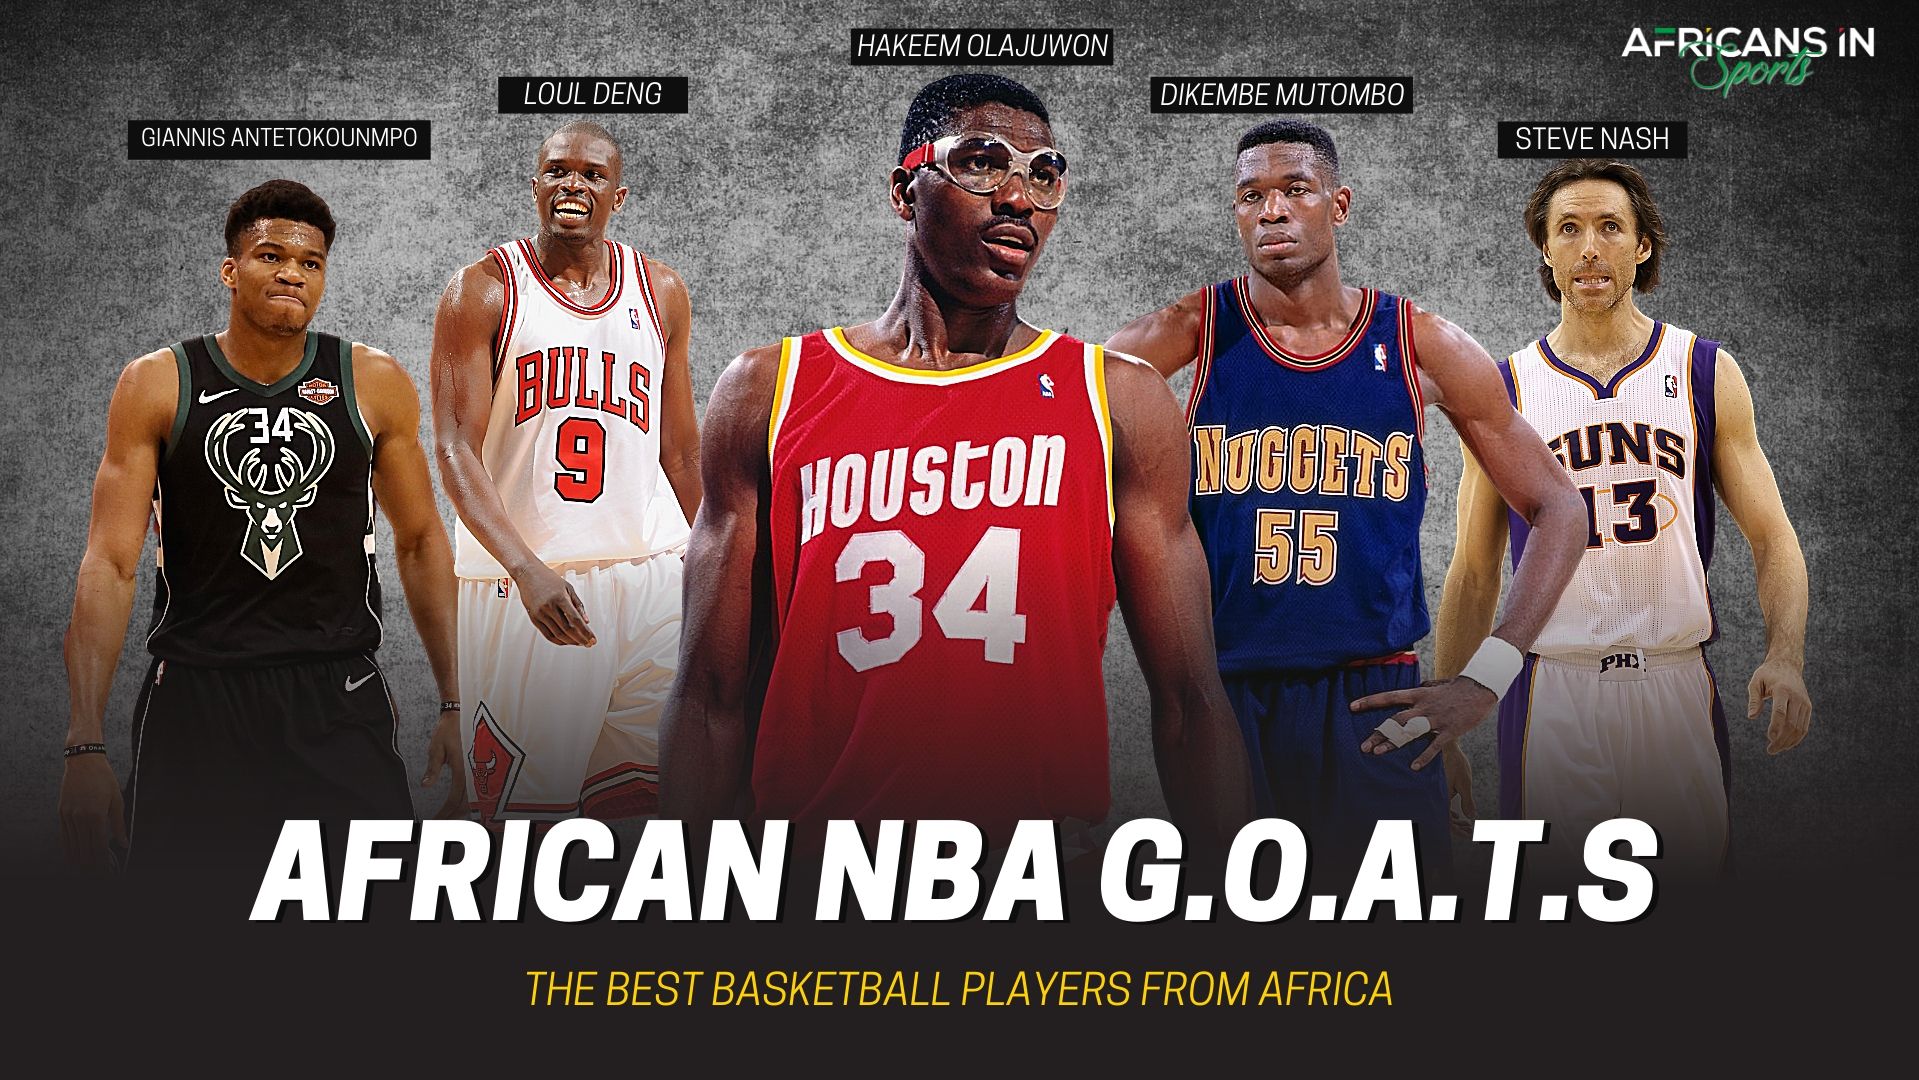 The NBA stars born in Africa